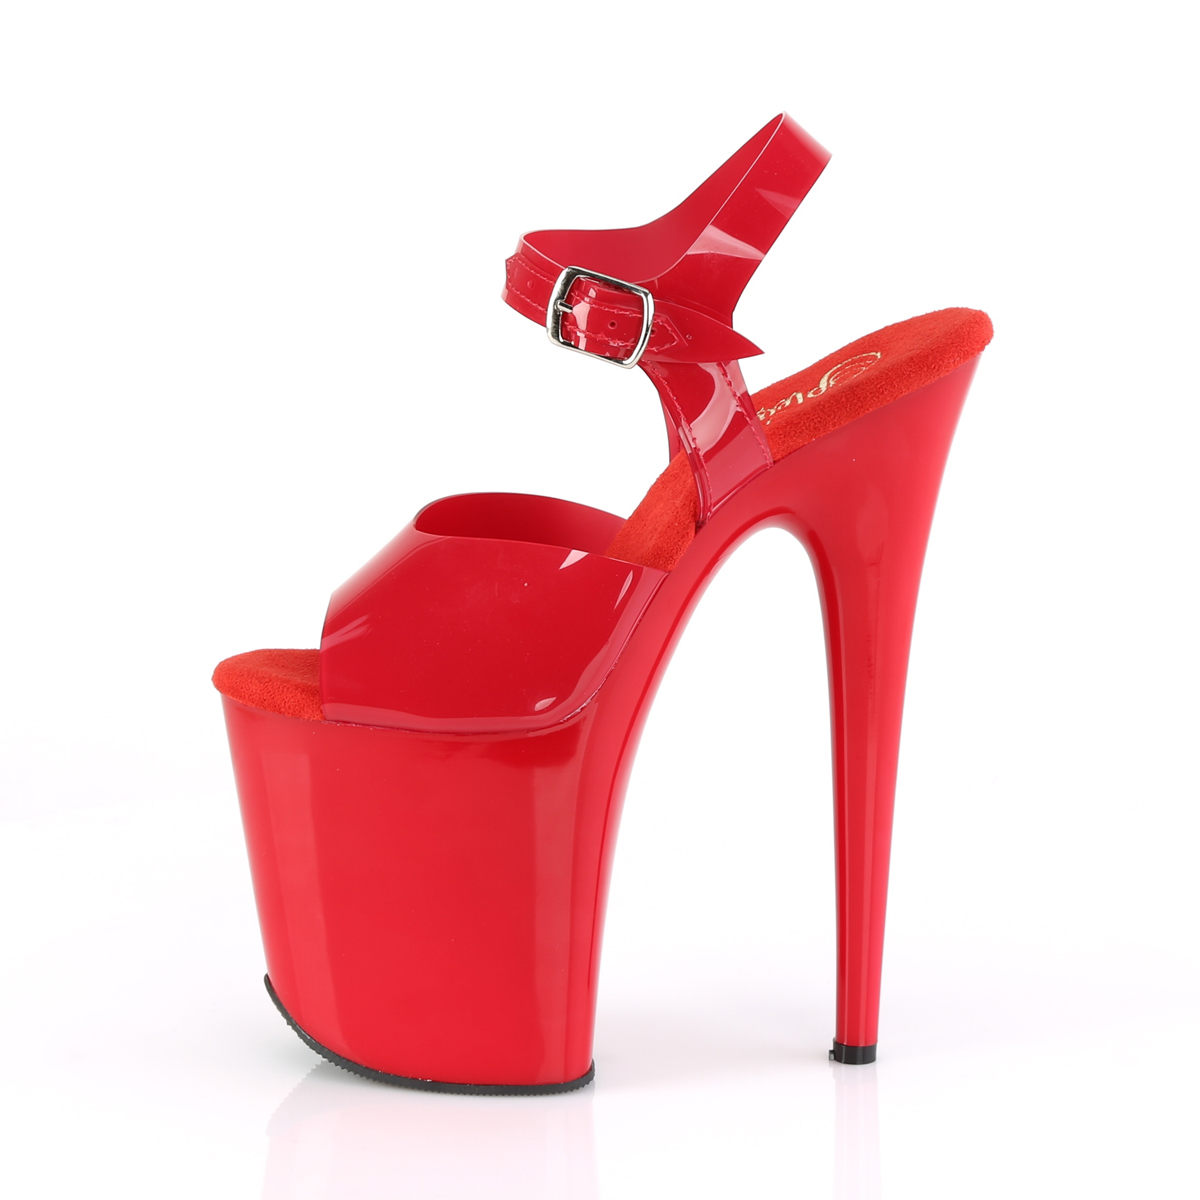 Red high heels 20 cm FLAMINGO-808N JELLY-LIKE stretch material platform ...